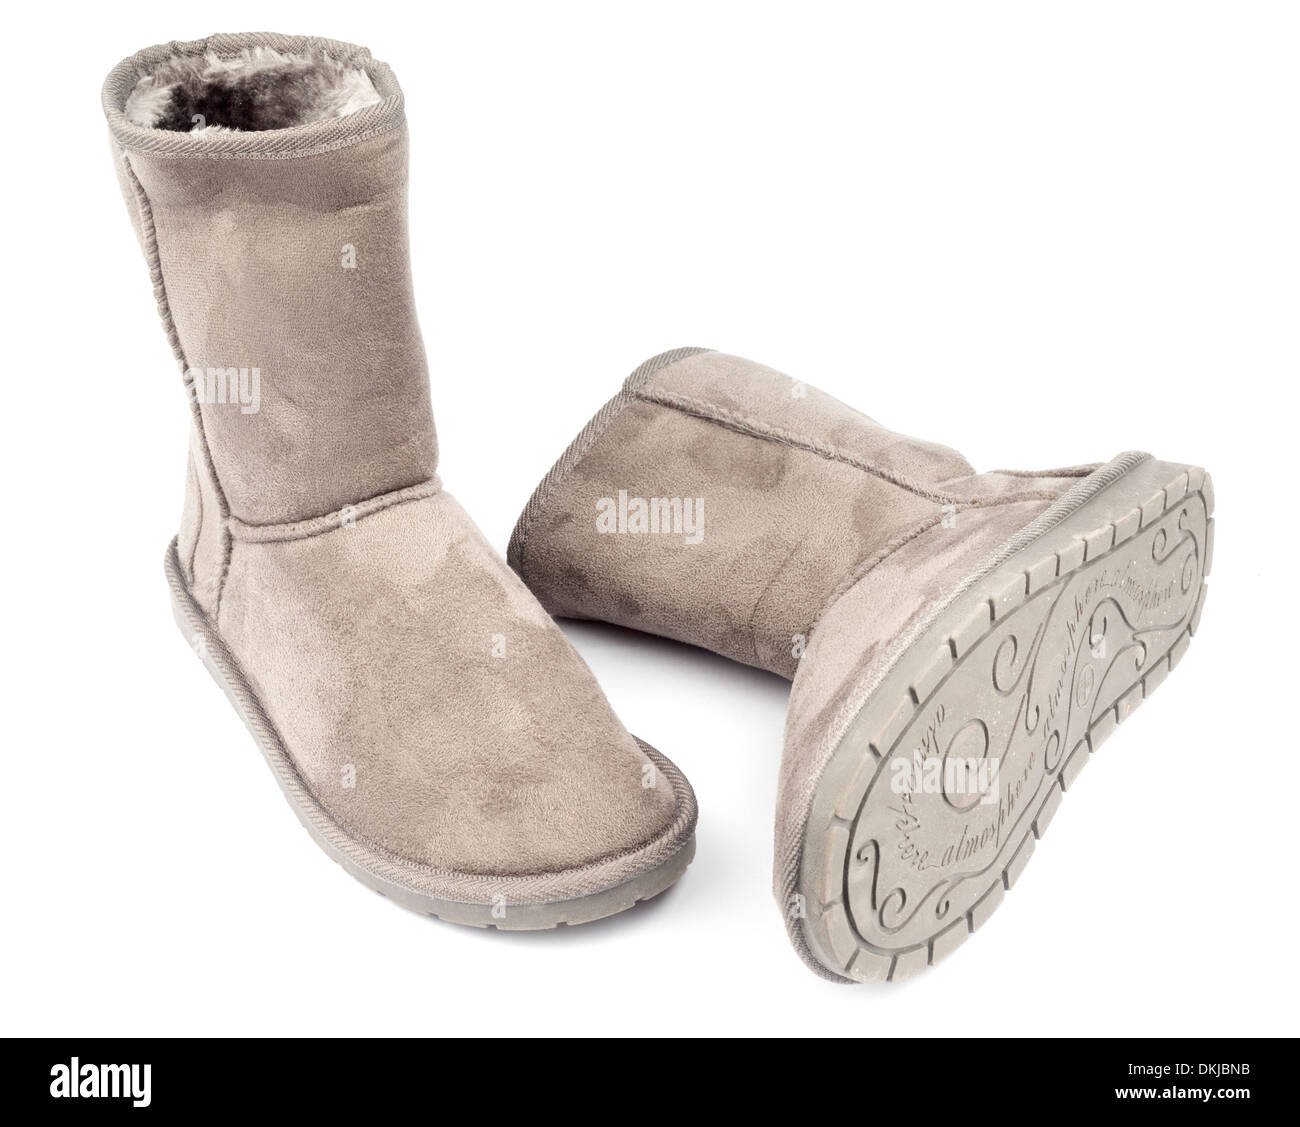 Grey ugg type winter boots Stock Photo 